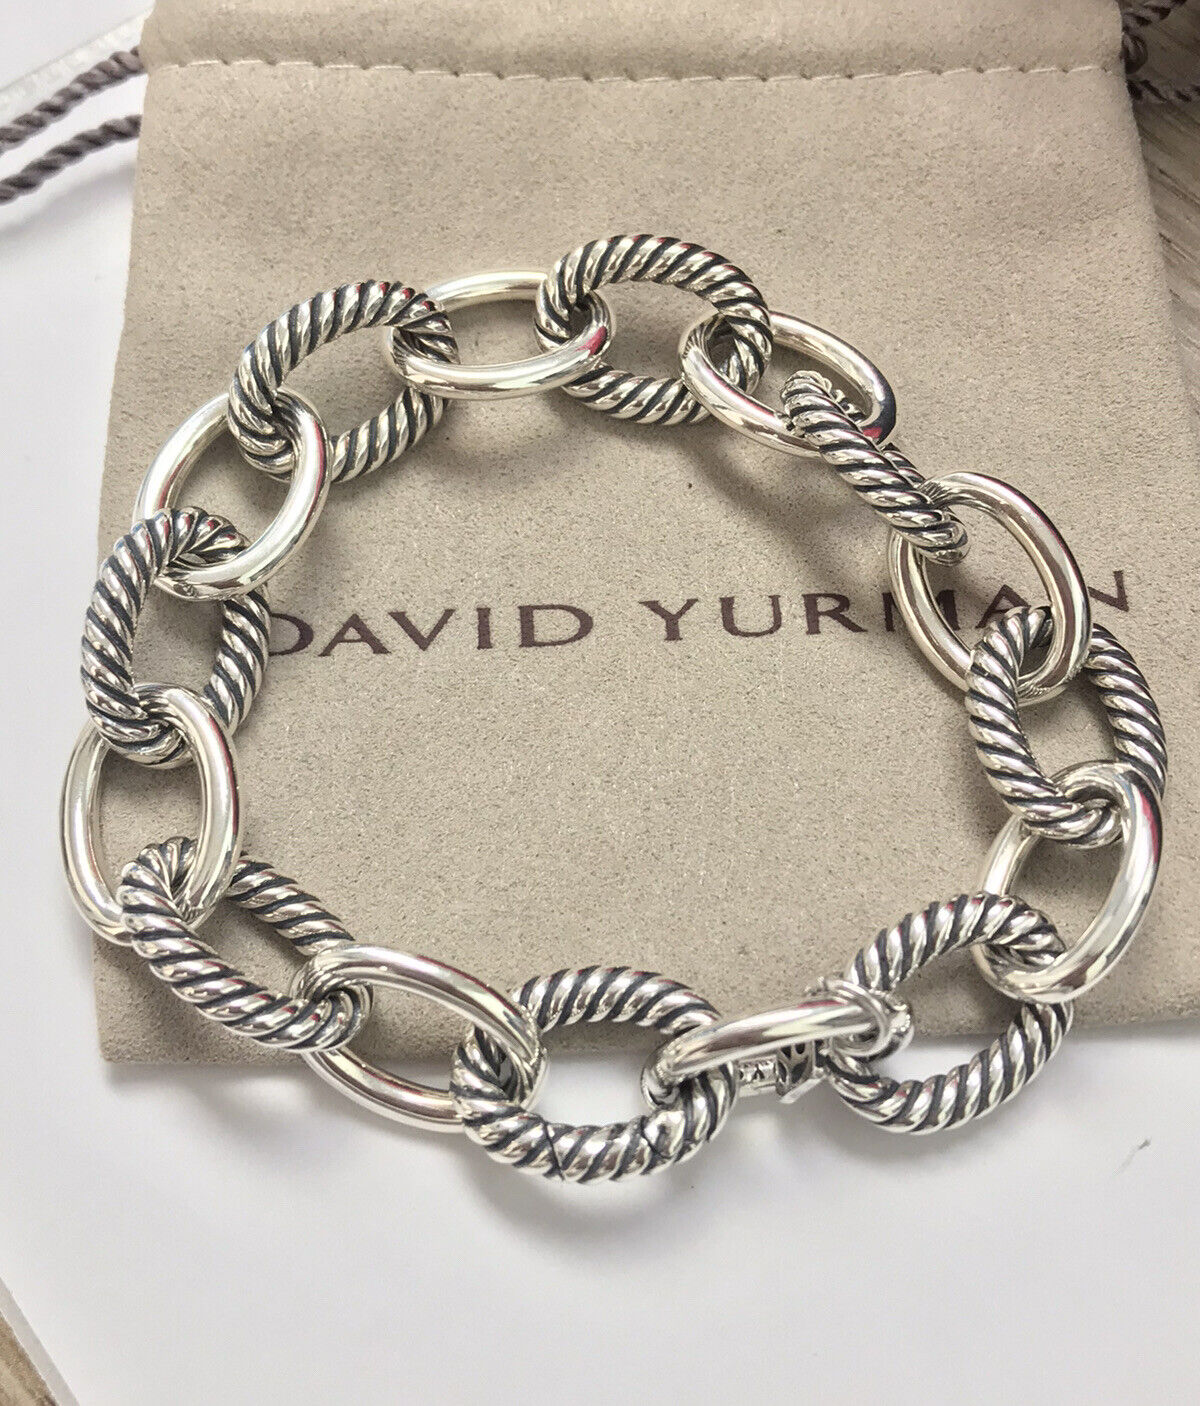 David Yurman 9.8mm Oval Link Chain, Cable  Bracelet in Sterling Silver